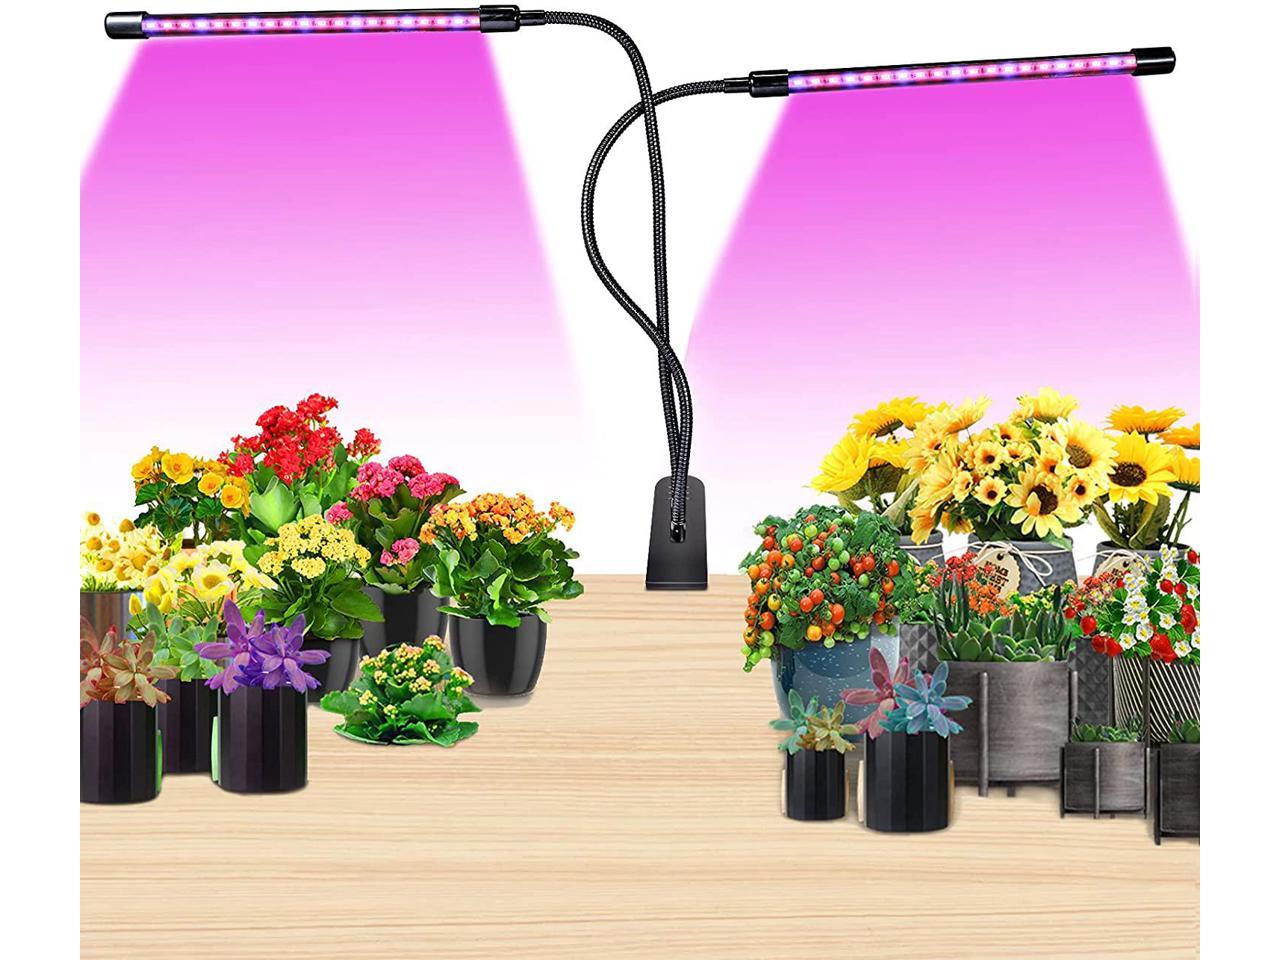 US LED Grow Light For Plants Full Spectrum Panel Plant Light Lamp with IR&UV 